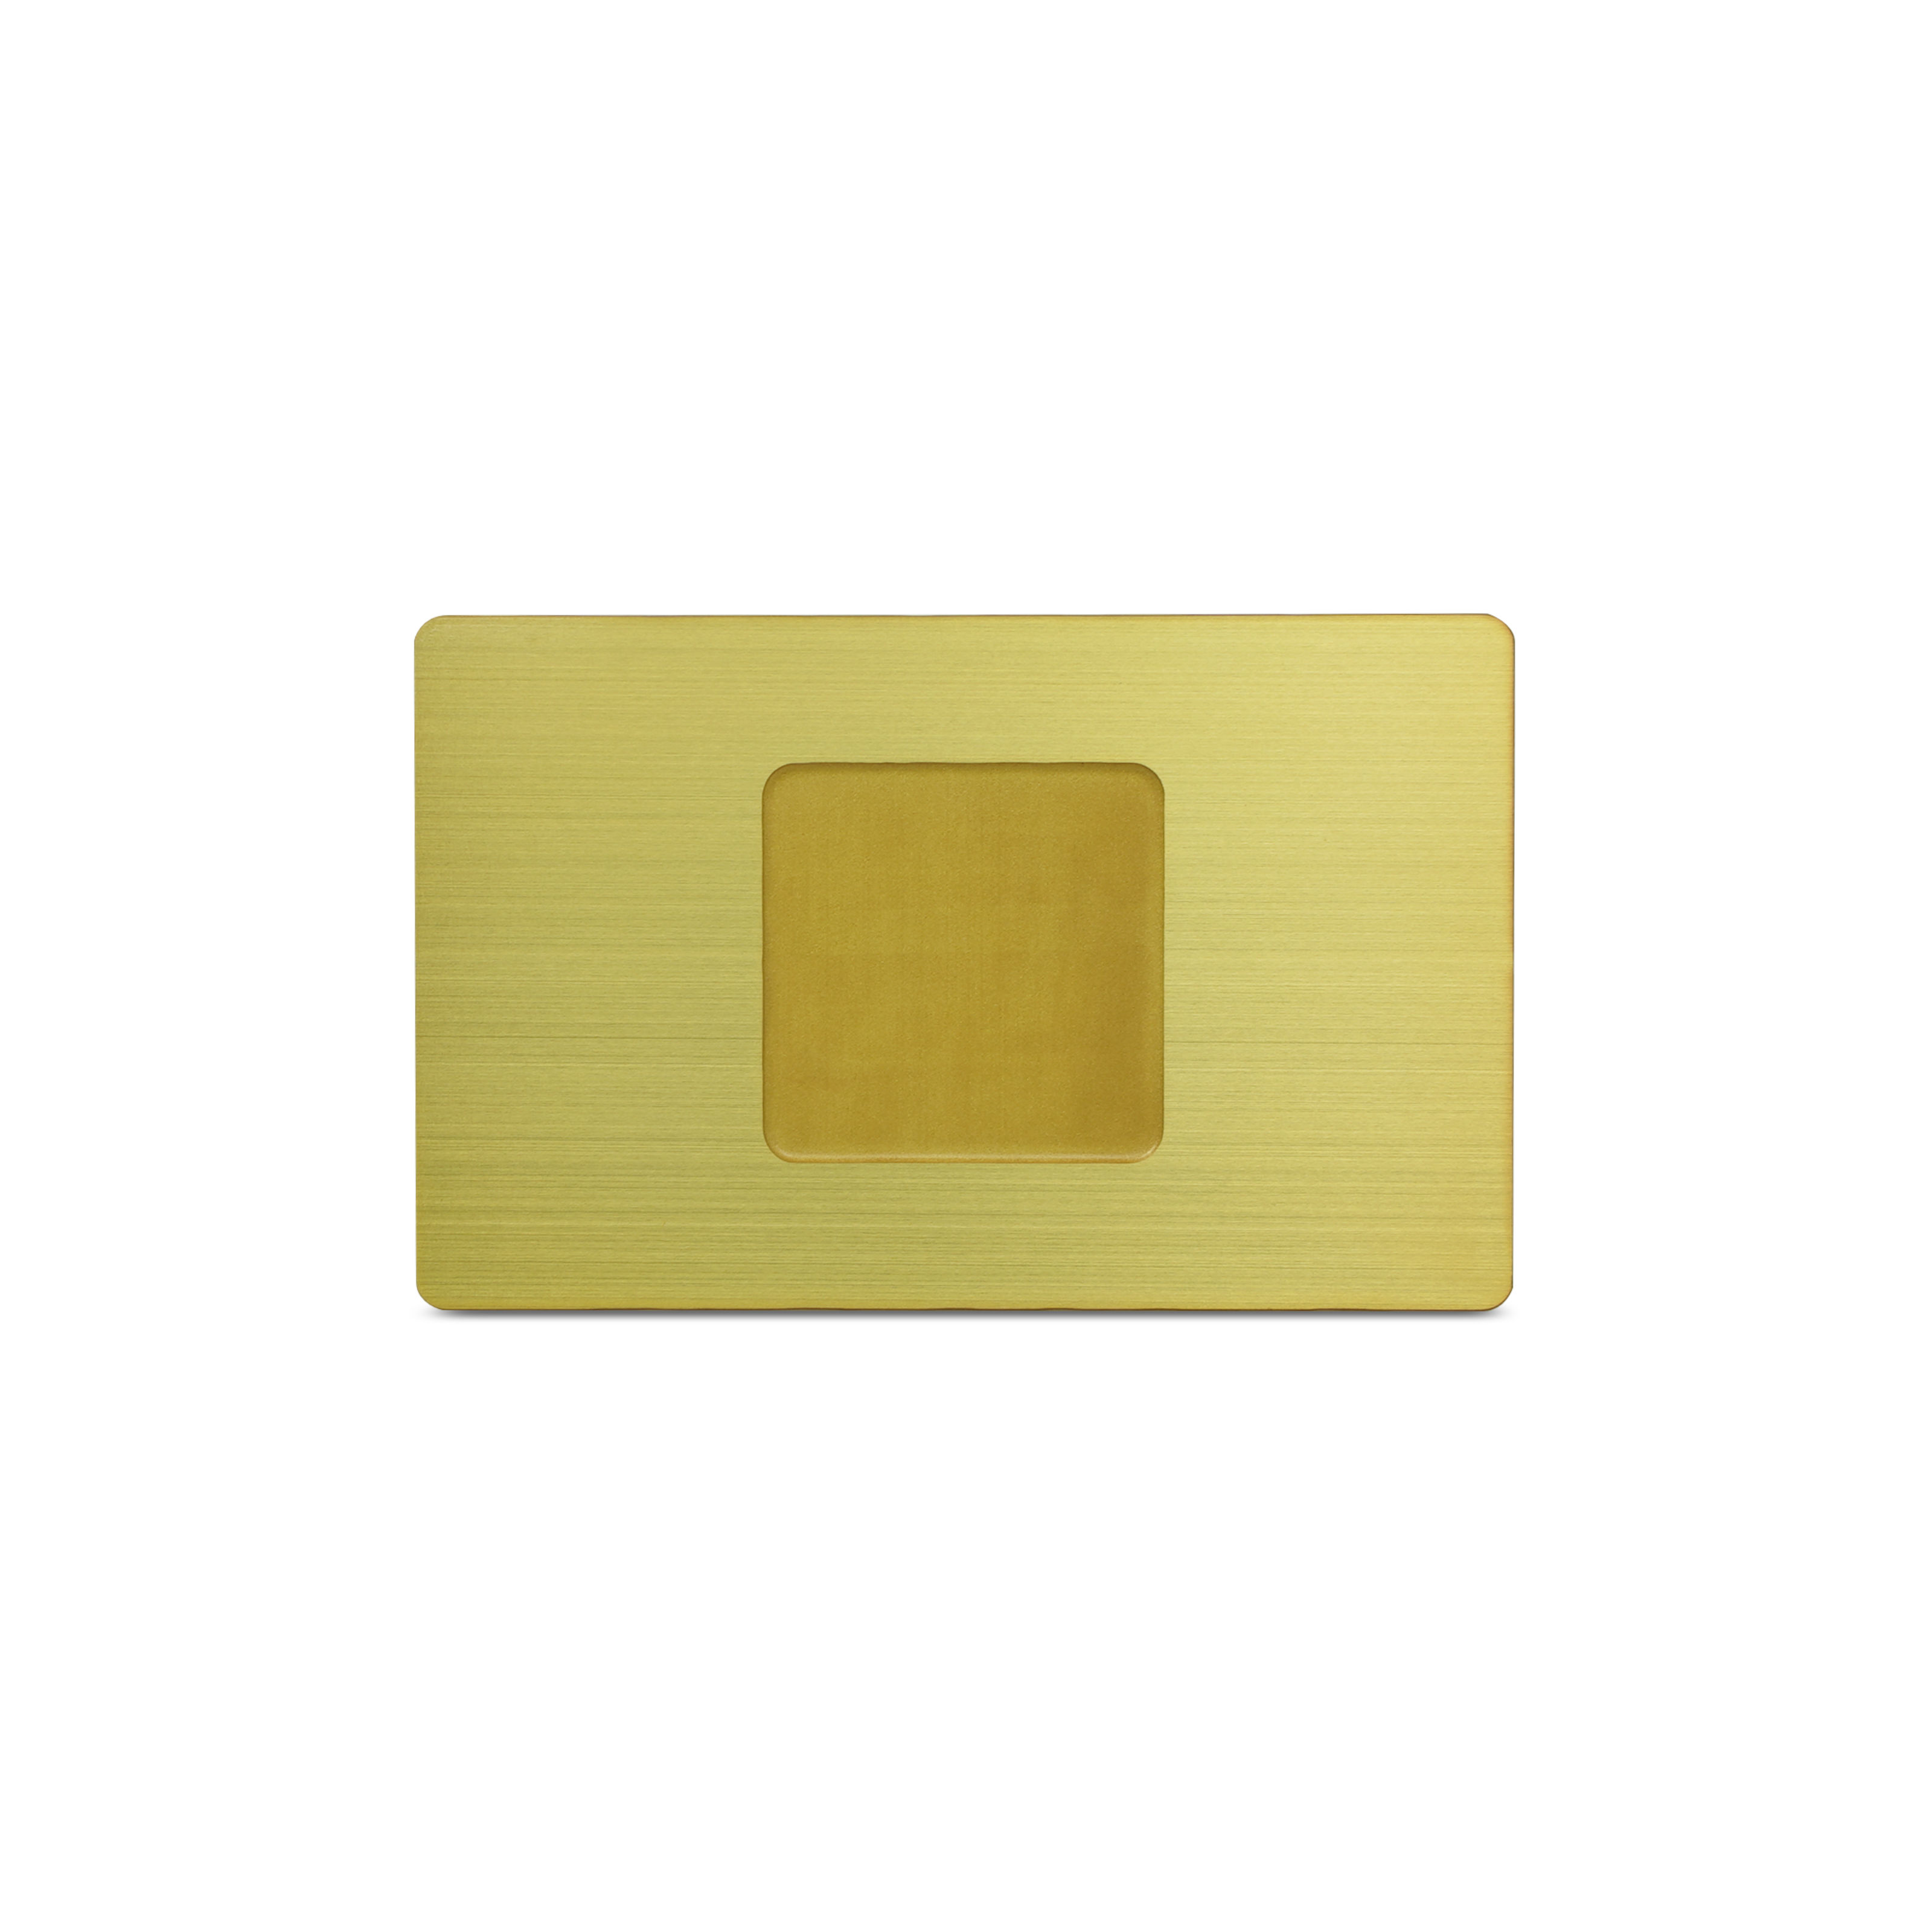 NFC card metal - 85.6 x 54 mm - NTAG213 - 180 byte - gold